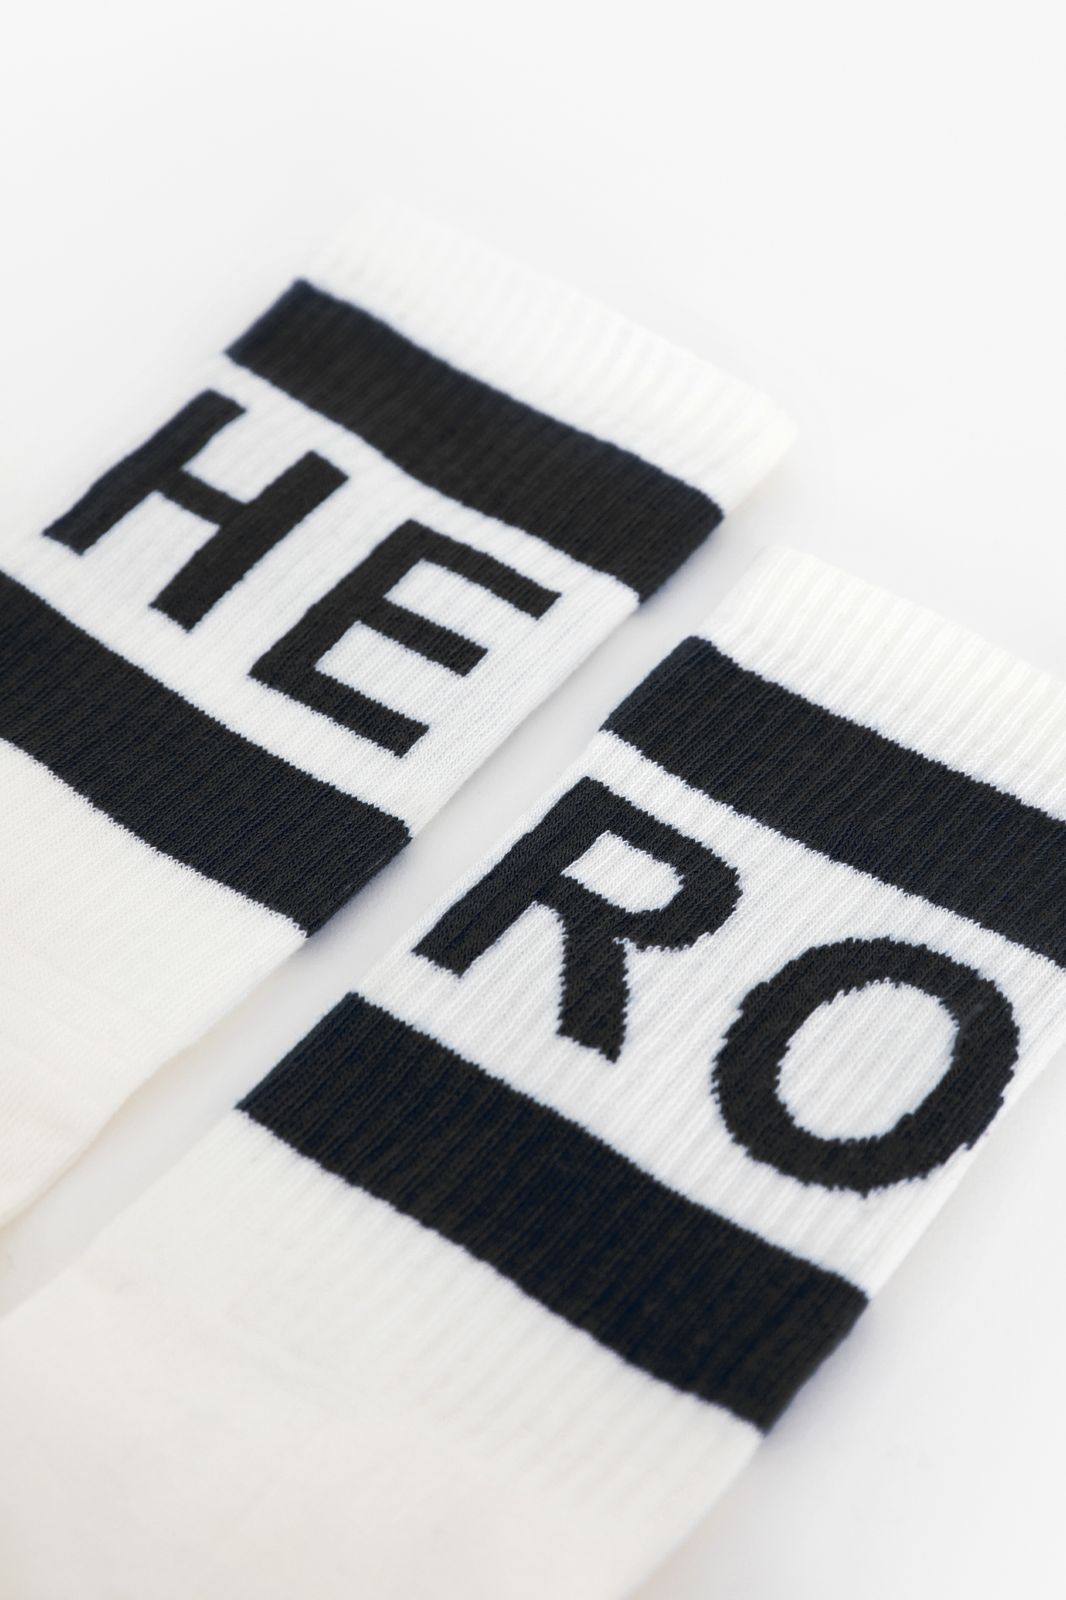 Heroes on socks Chaussettes vintage - noir/blanc